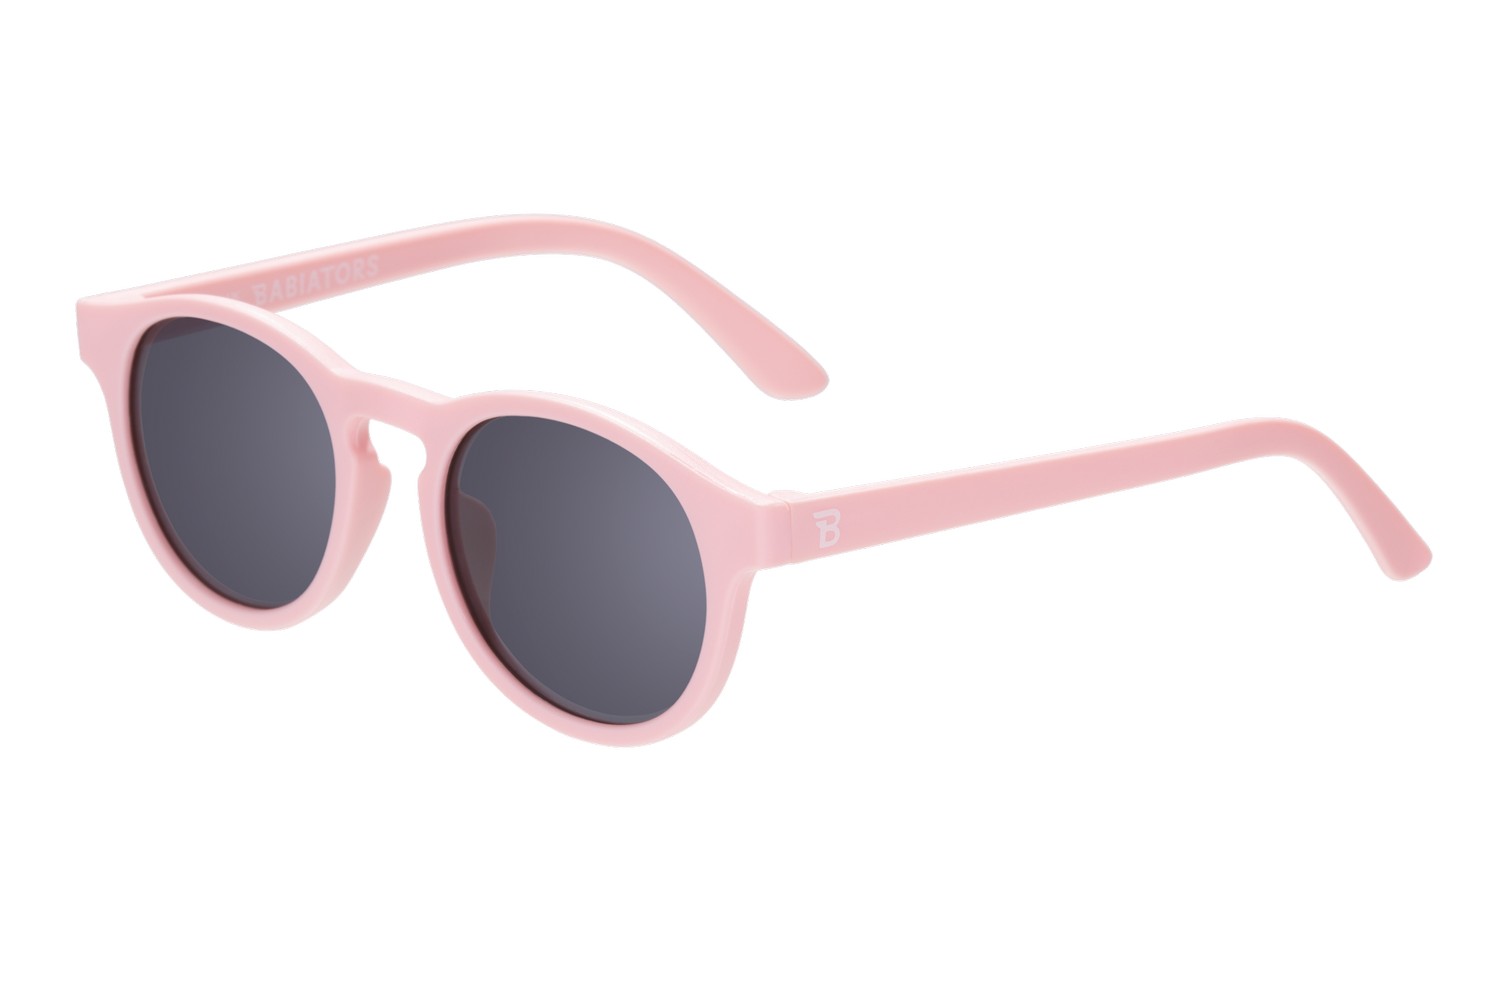 Babiators - UV sunglasses for kids - Keyholes - Originals - Ballerina Pink